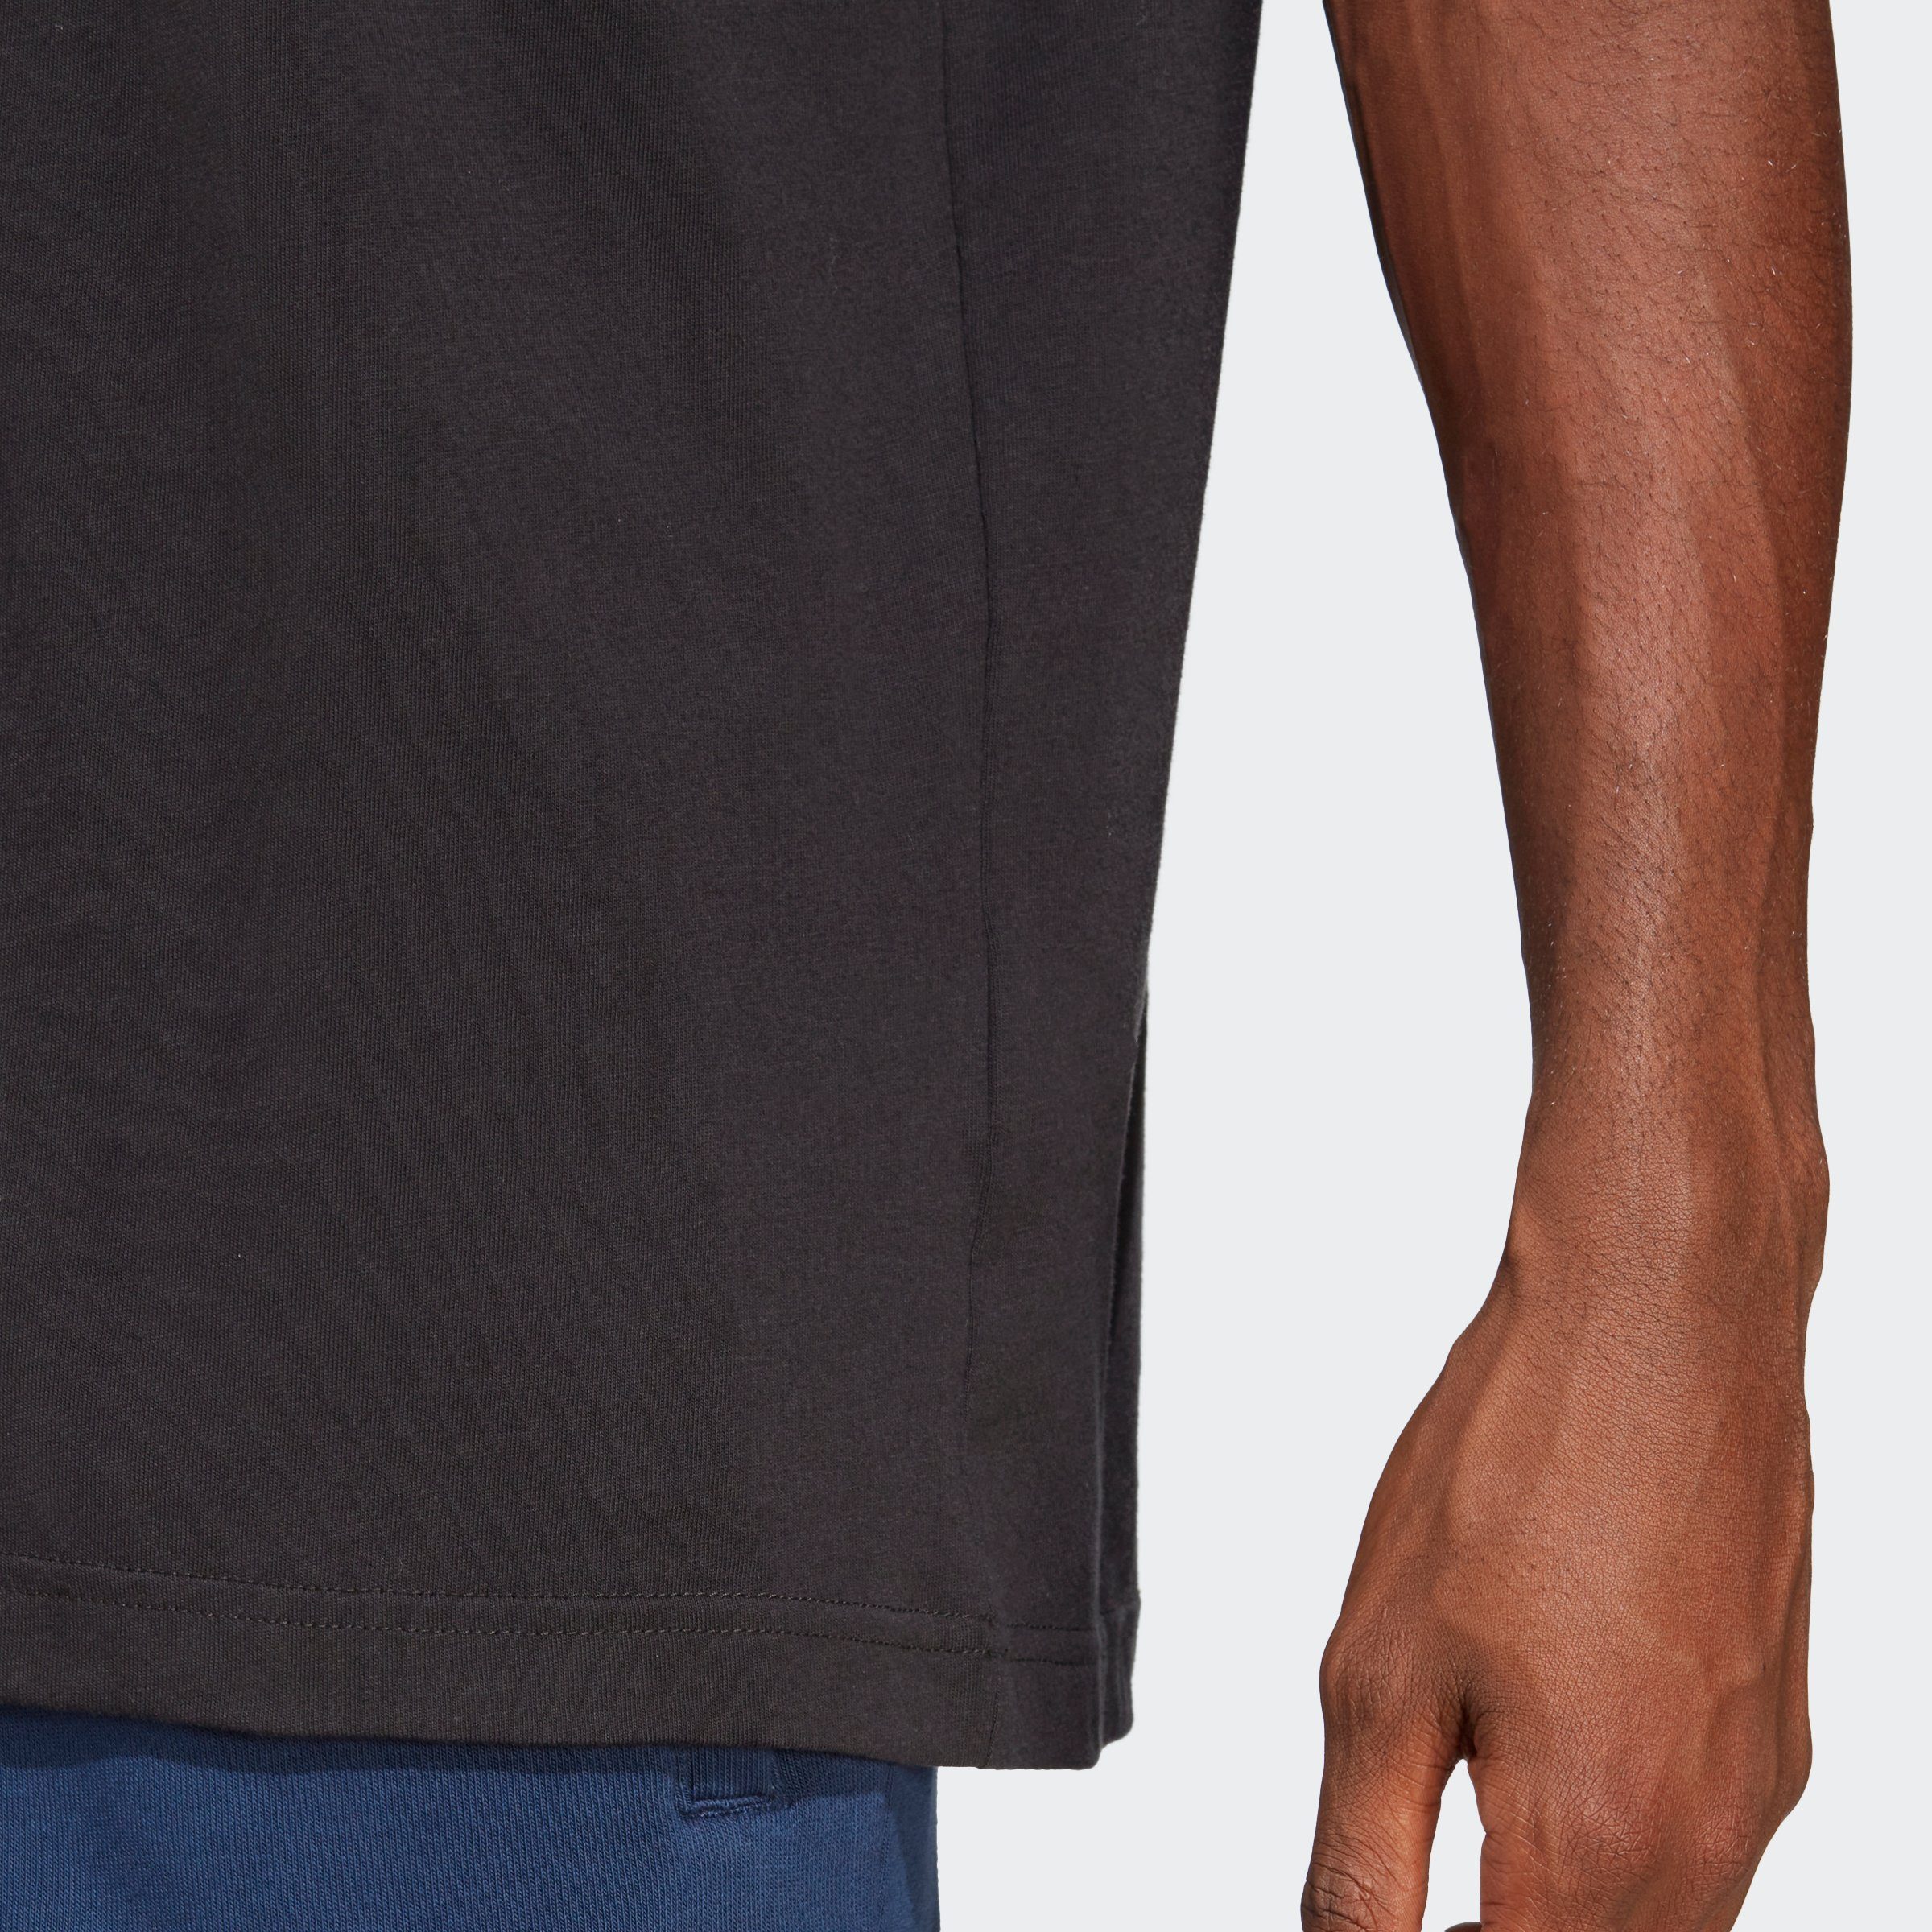 adidas Originals T-Shirt TREFOIL ESSENTIALS Black